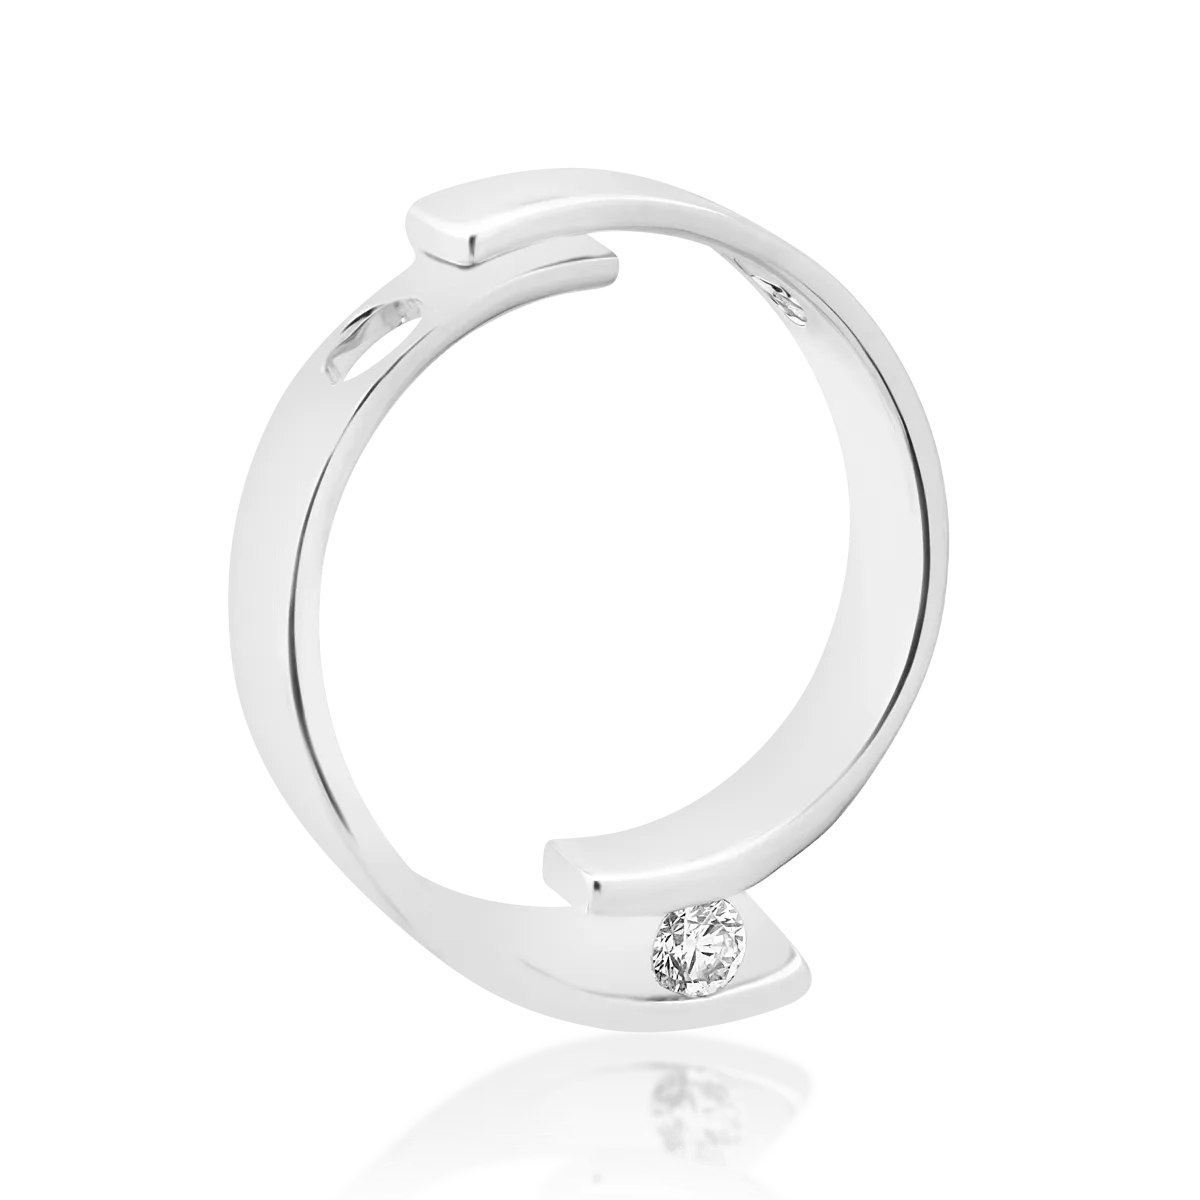 18K white gold pendant with 0.09ct diamond